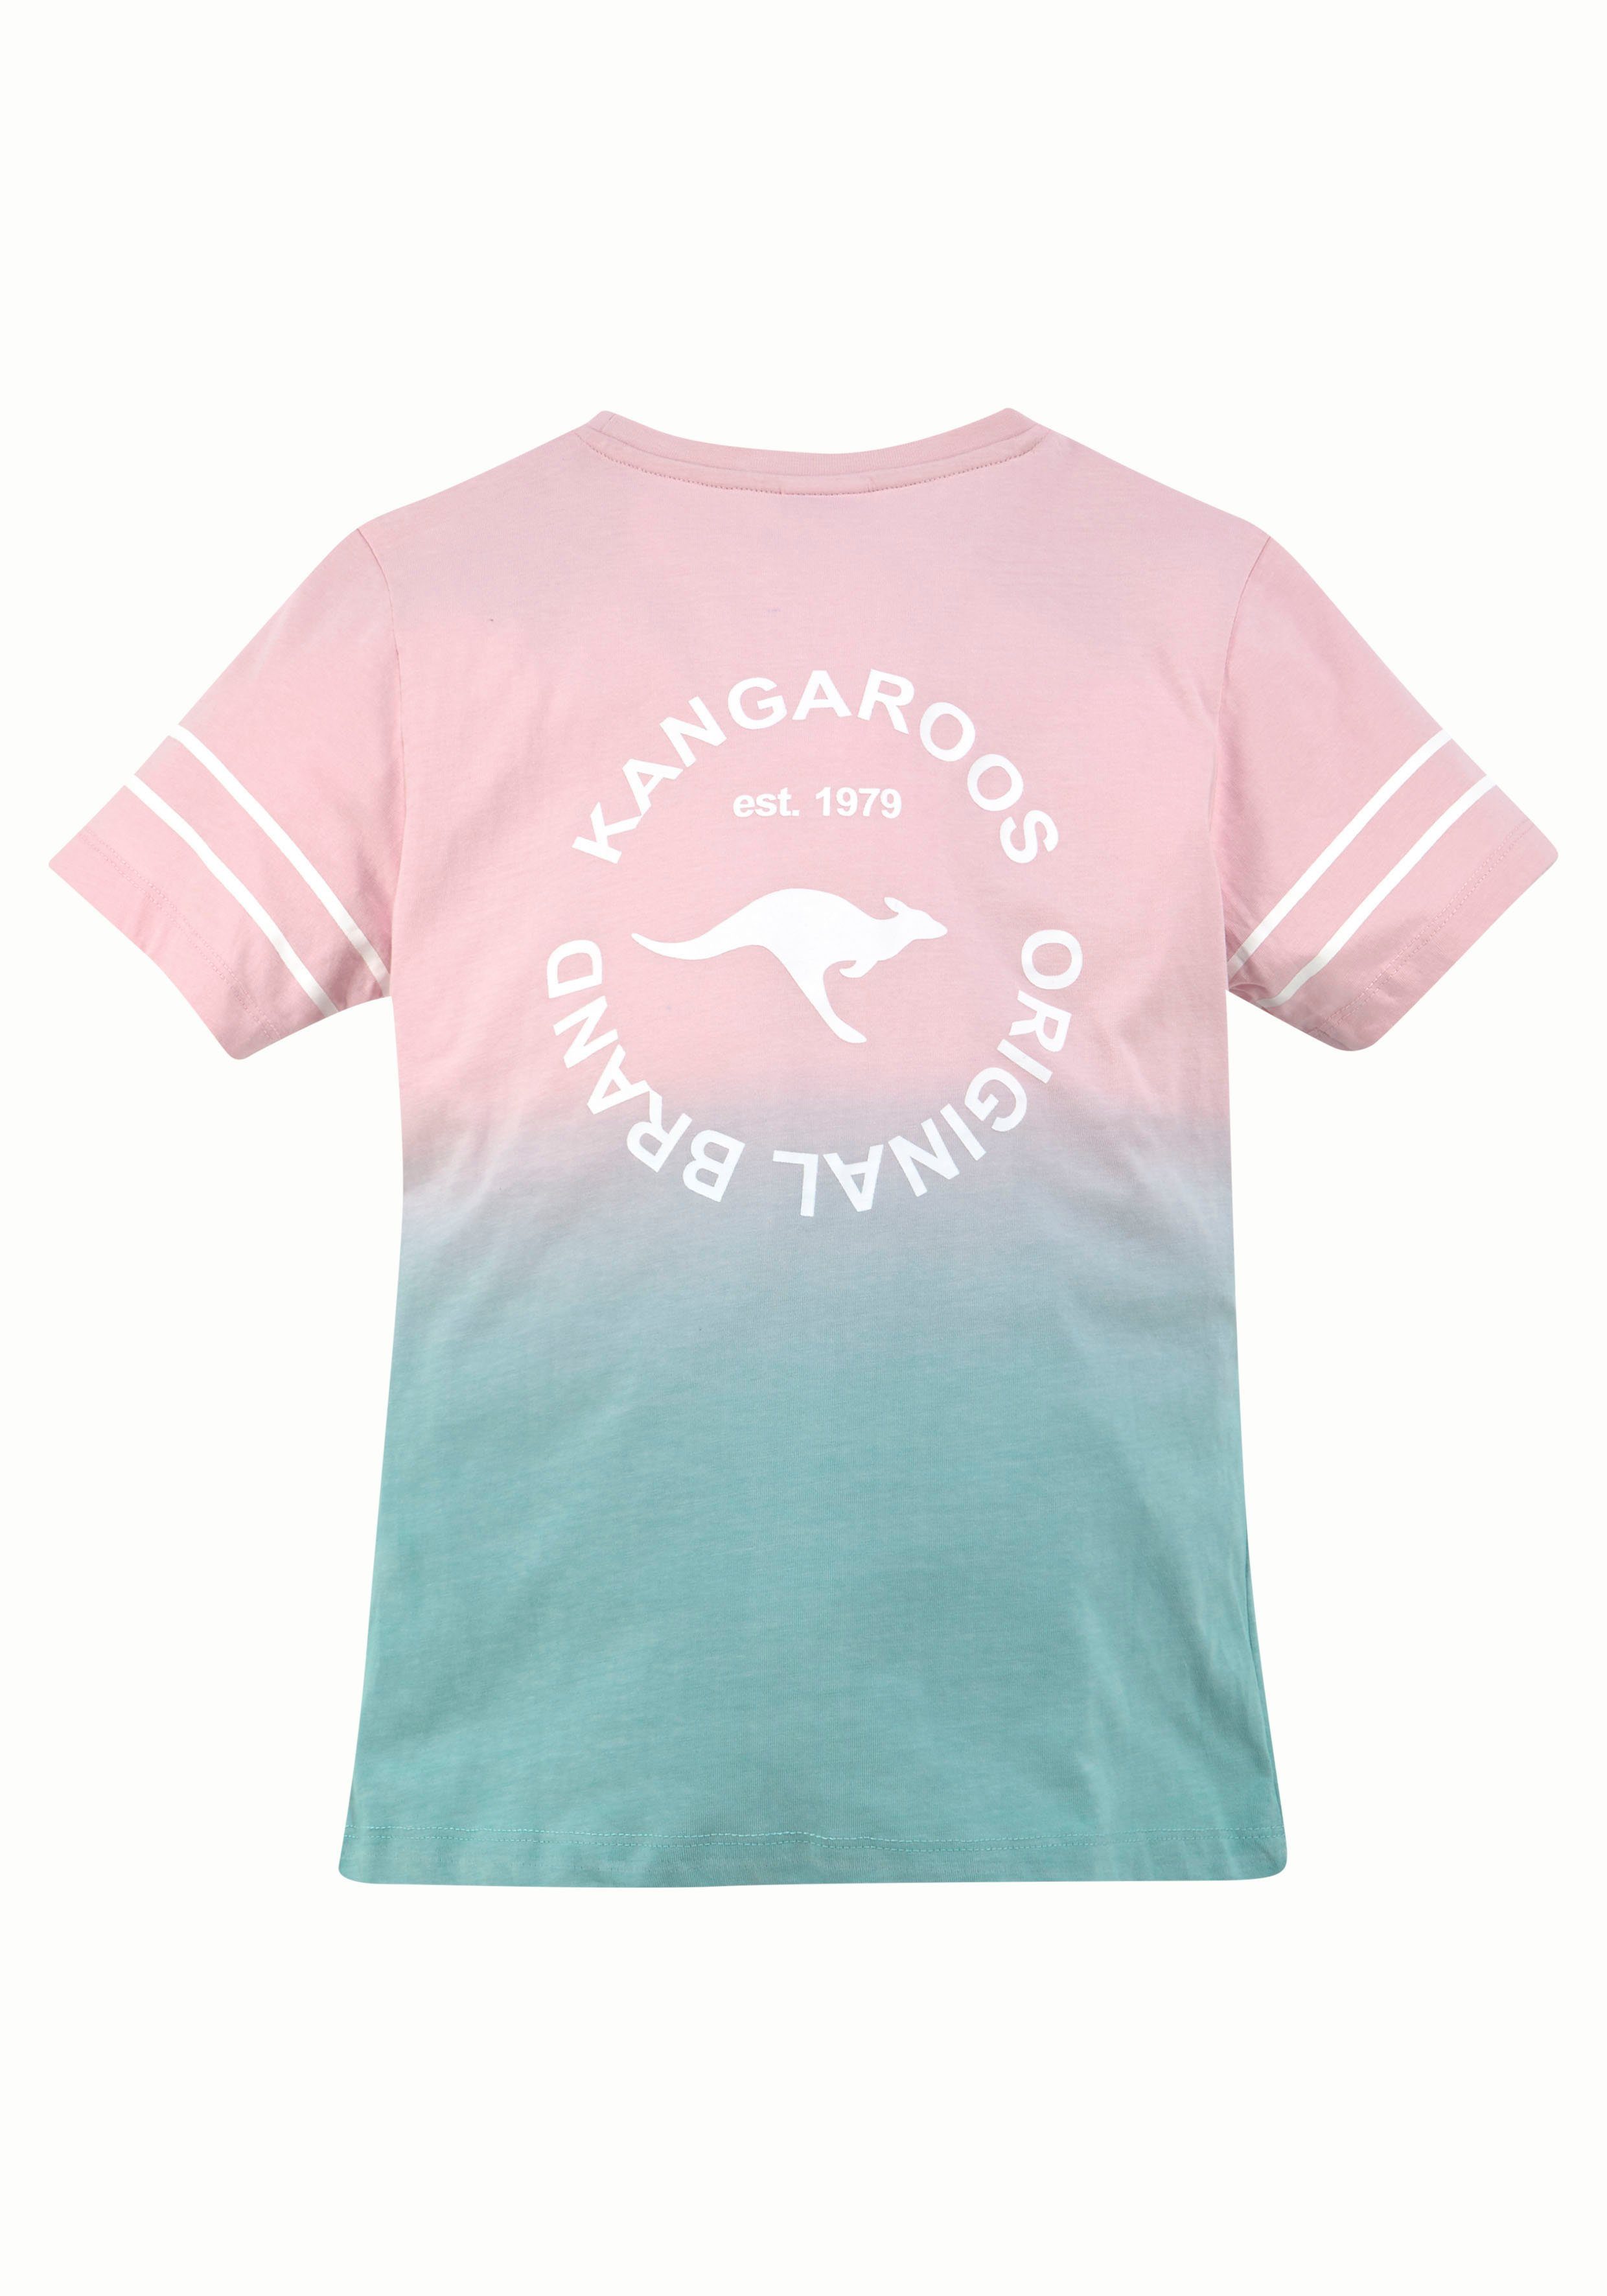 KangaROOS in T-Shirt bequemer Weite